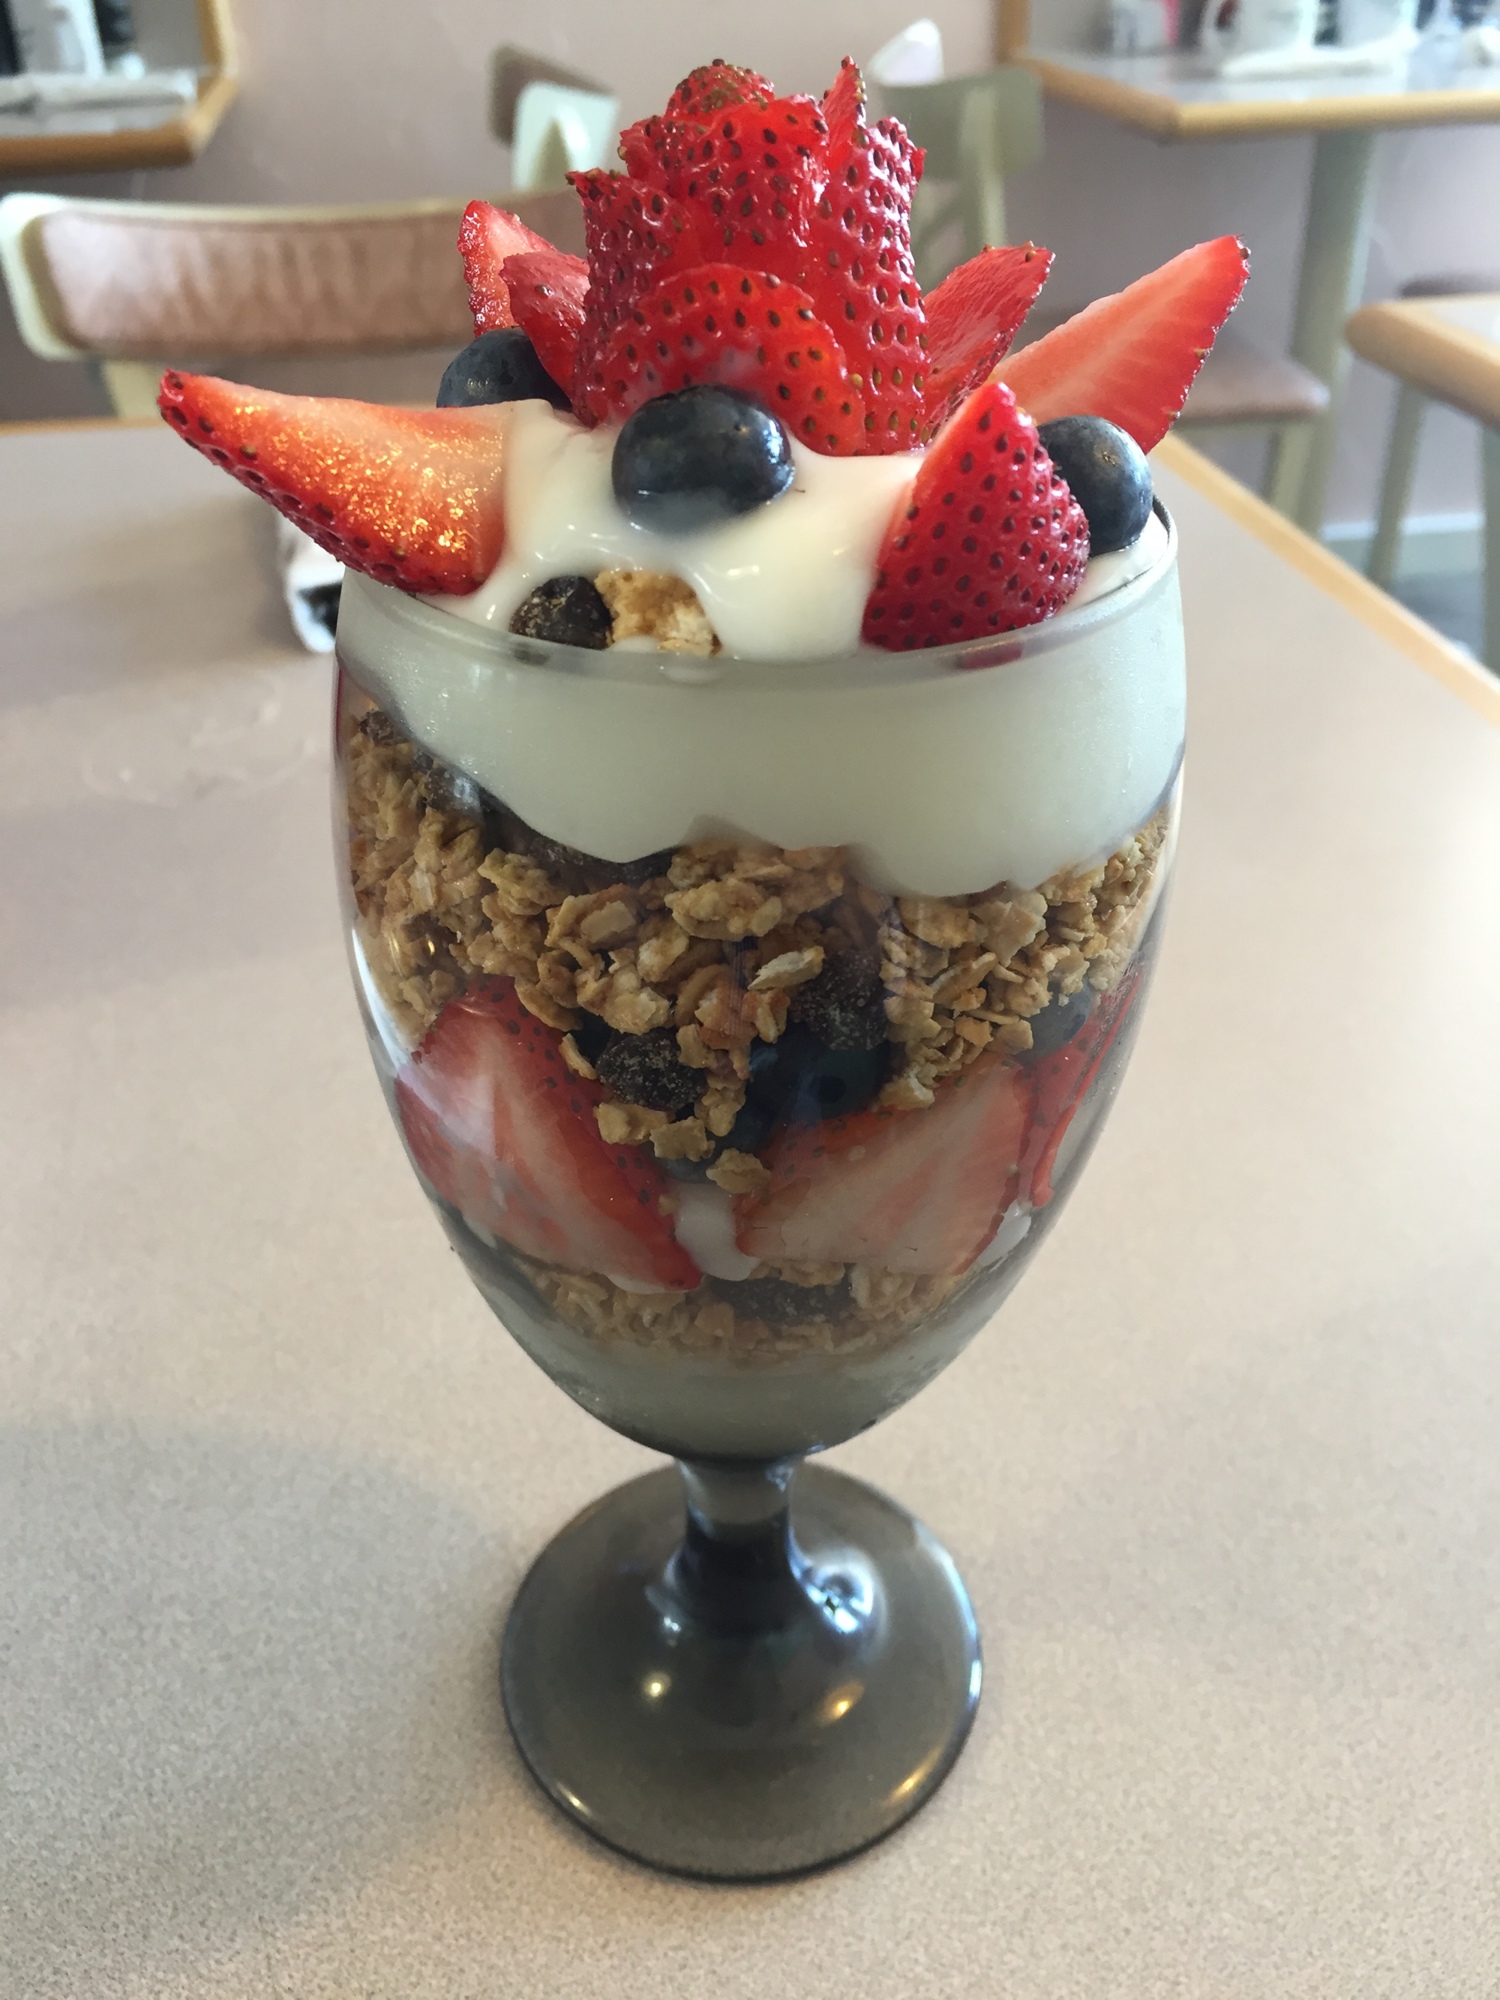 Longbeach Café’s Good Morning Cocktail, with layers of vanilla yogurt, granola and seasonal berries. It is $7.95.